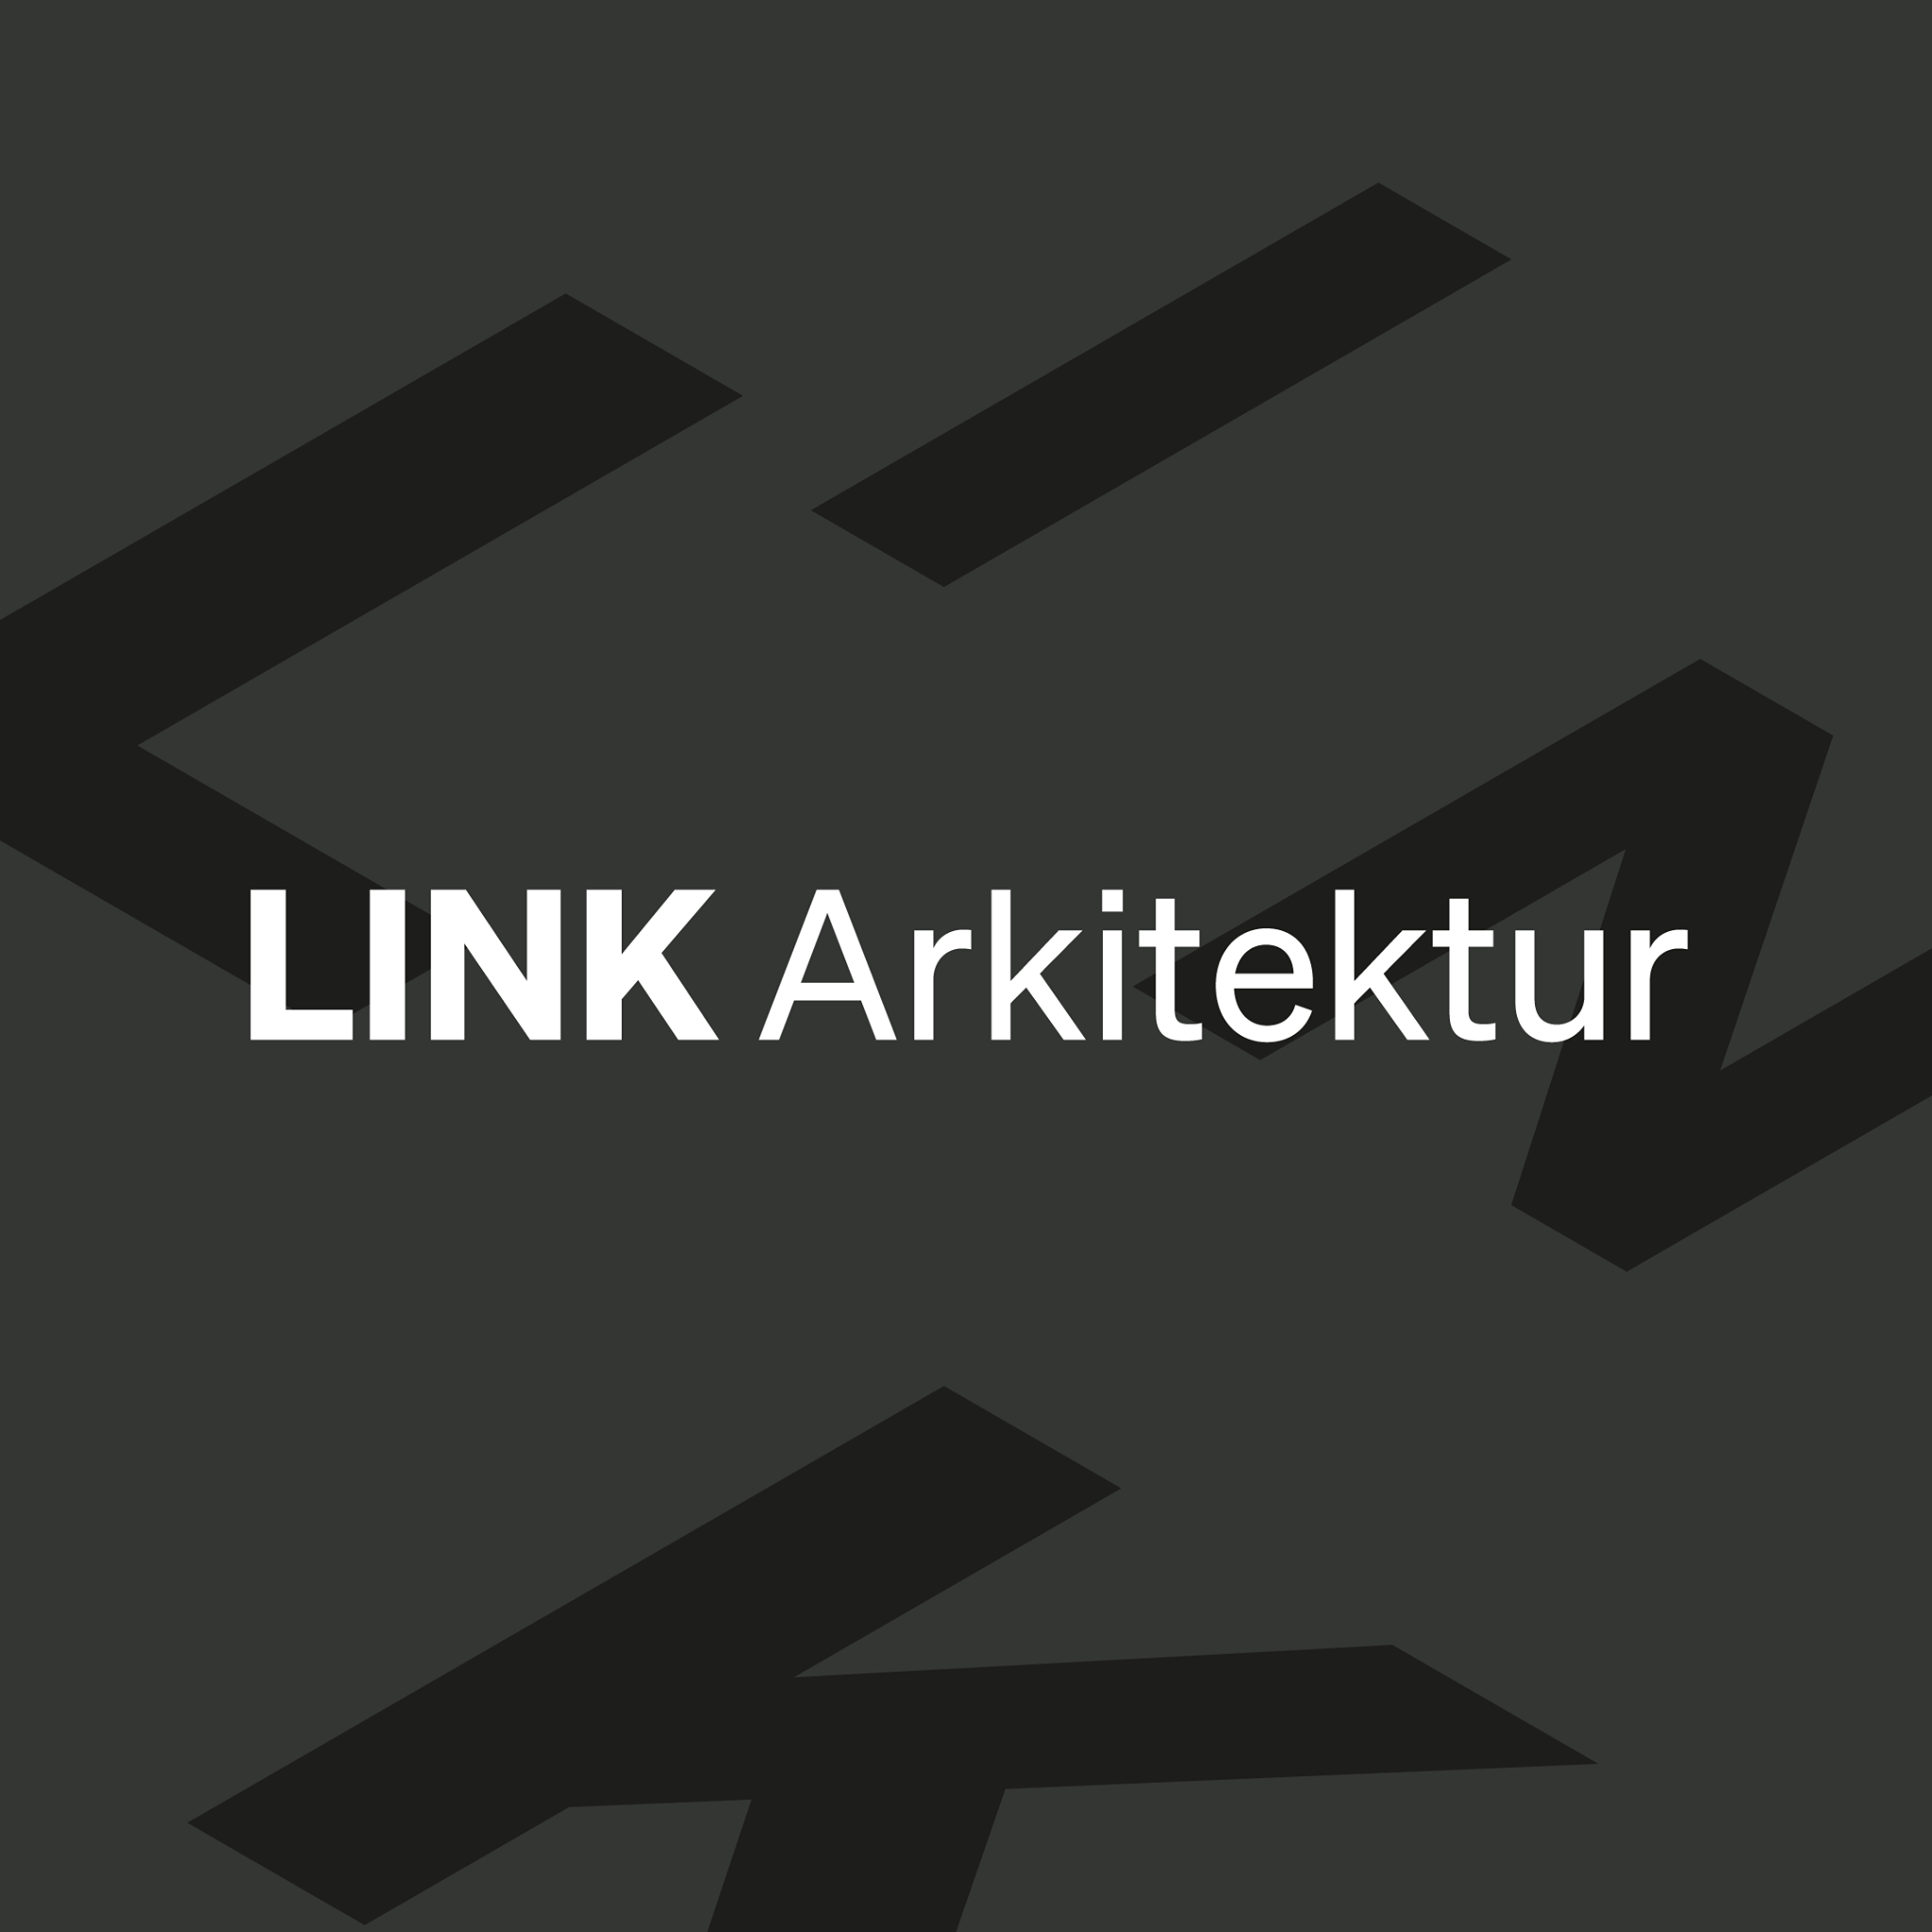 LINK arkitektur.png